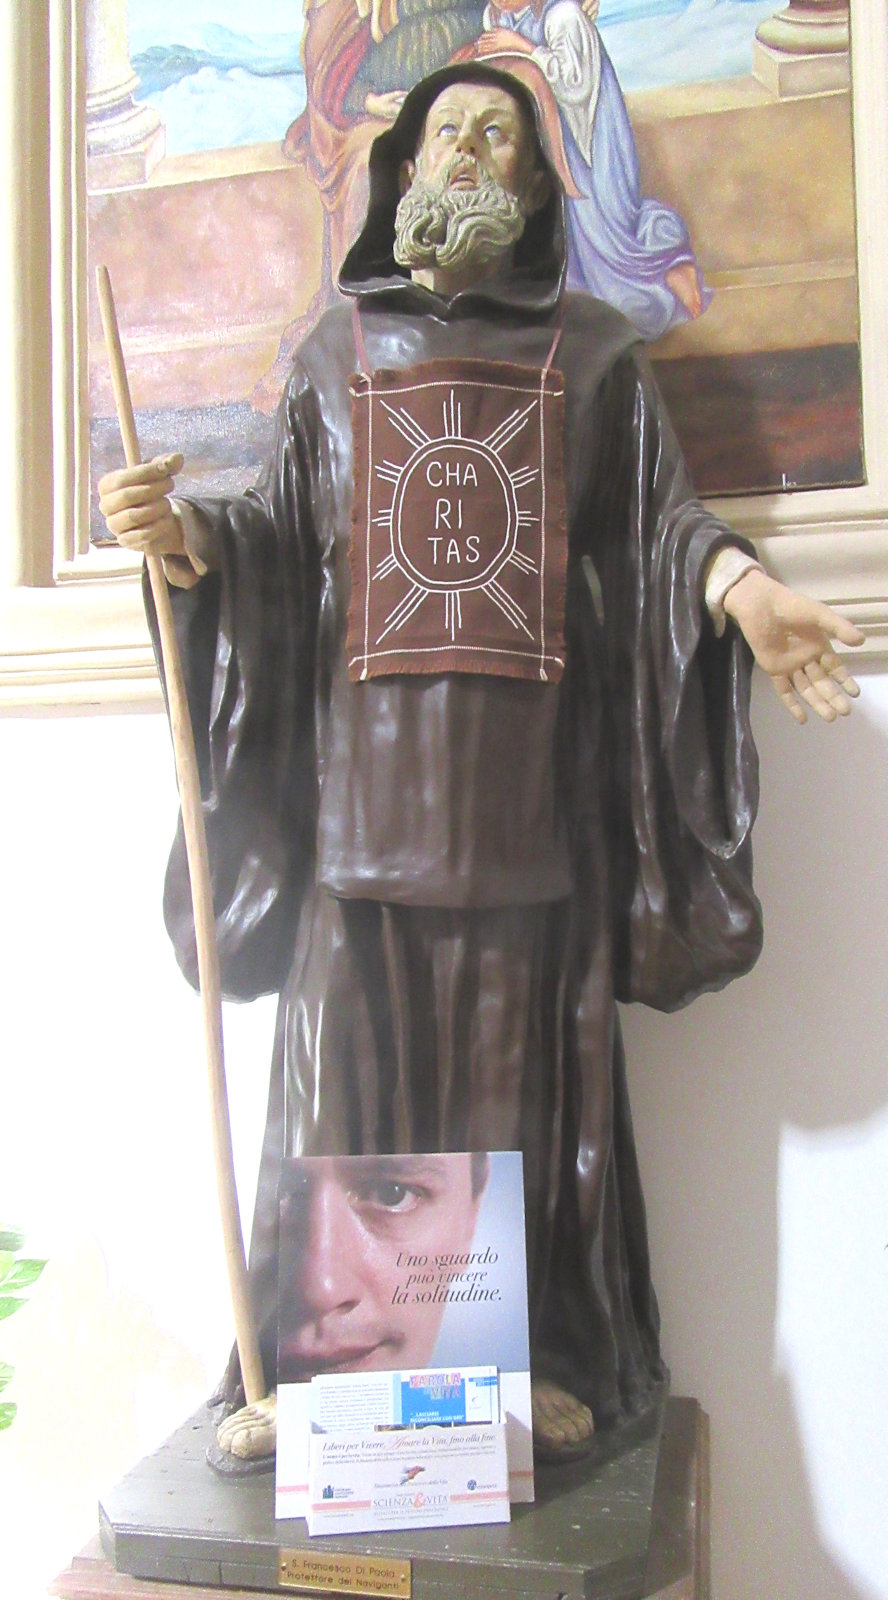 Statue in der in der Franziskanerkirche Santa Maria del Gesù in Avola